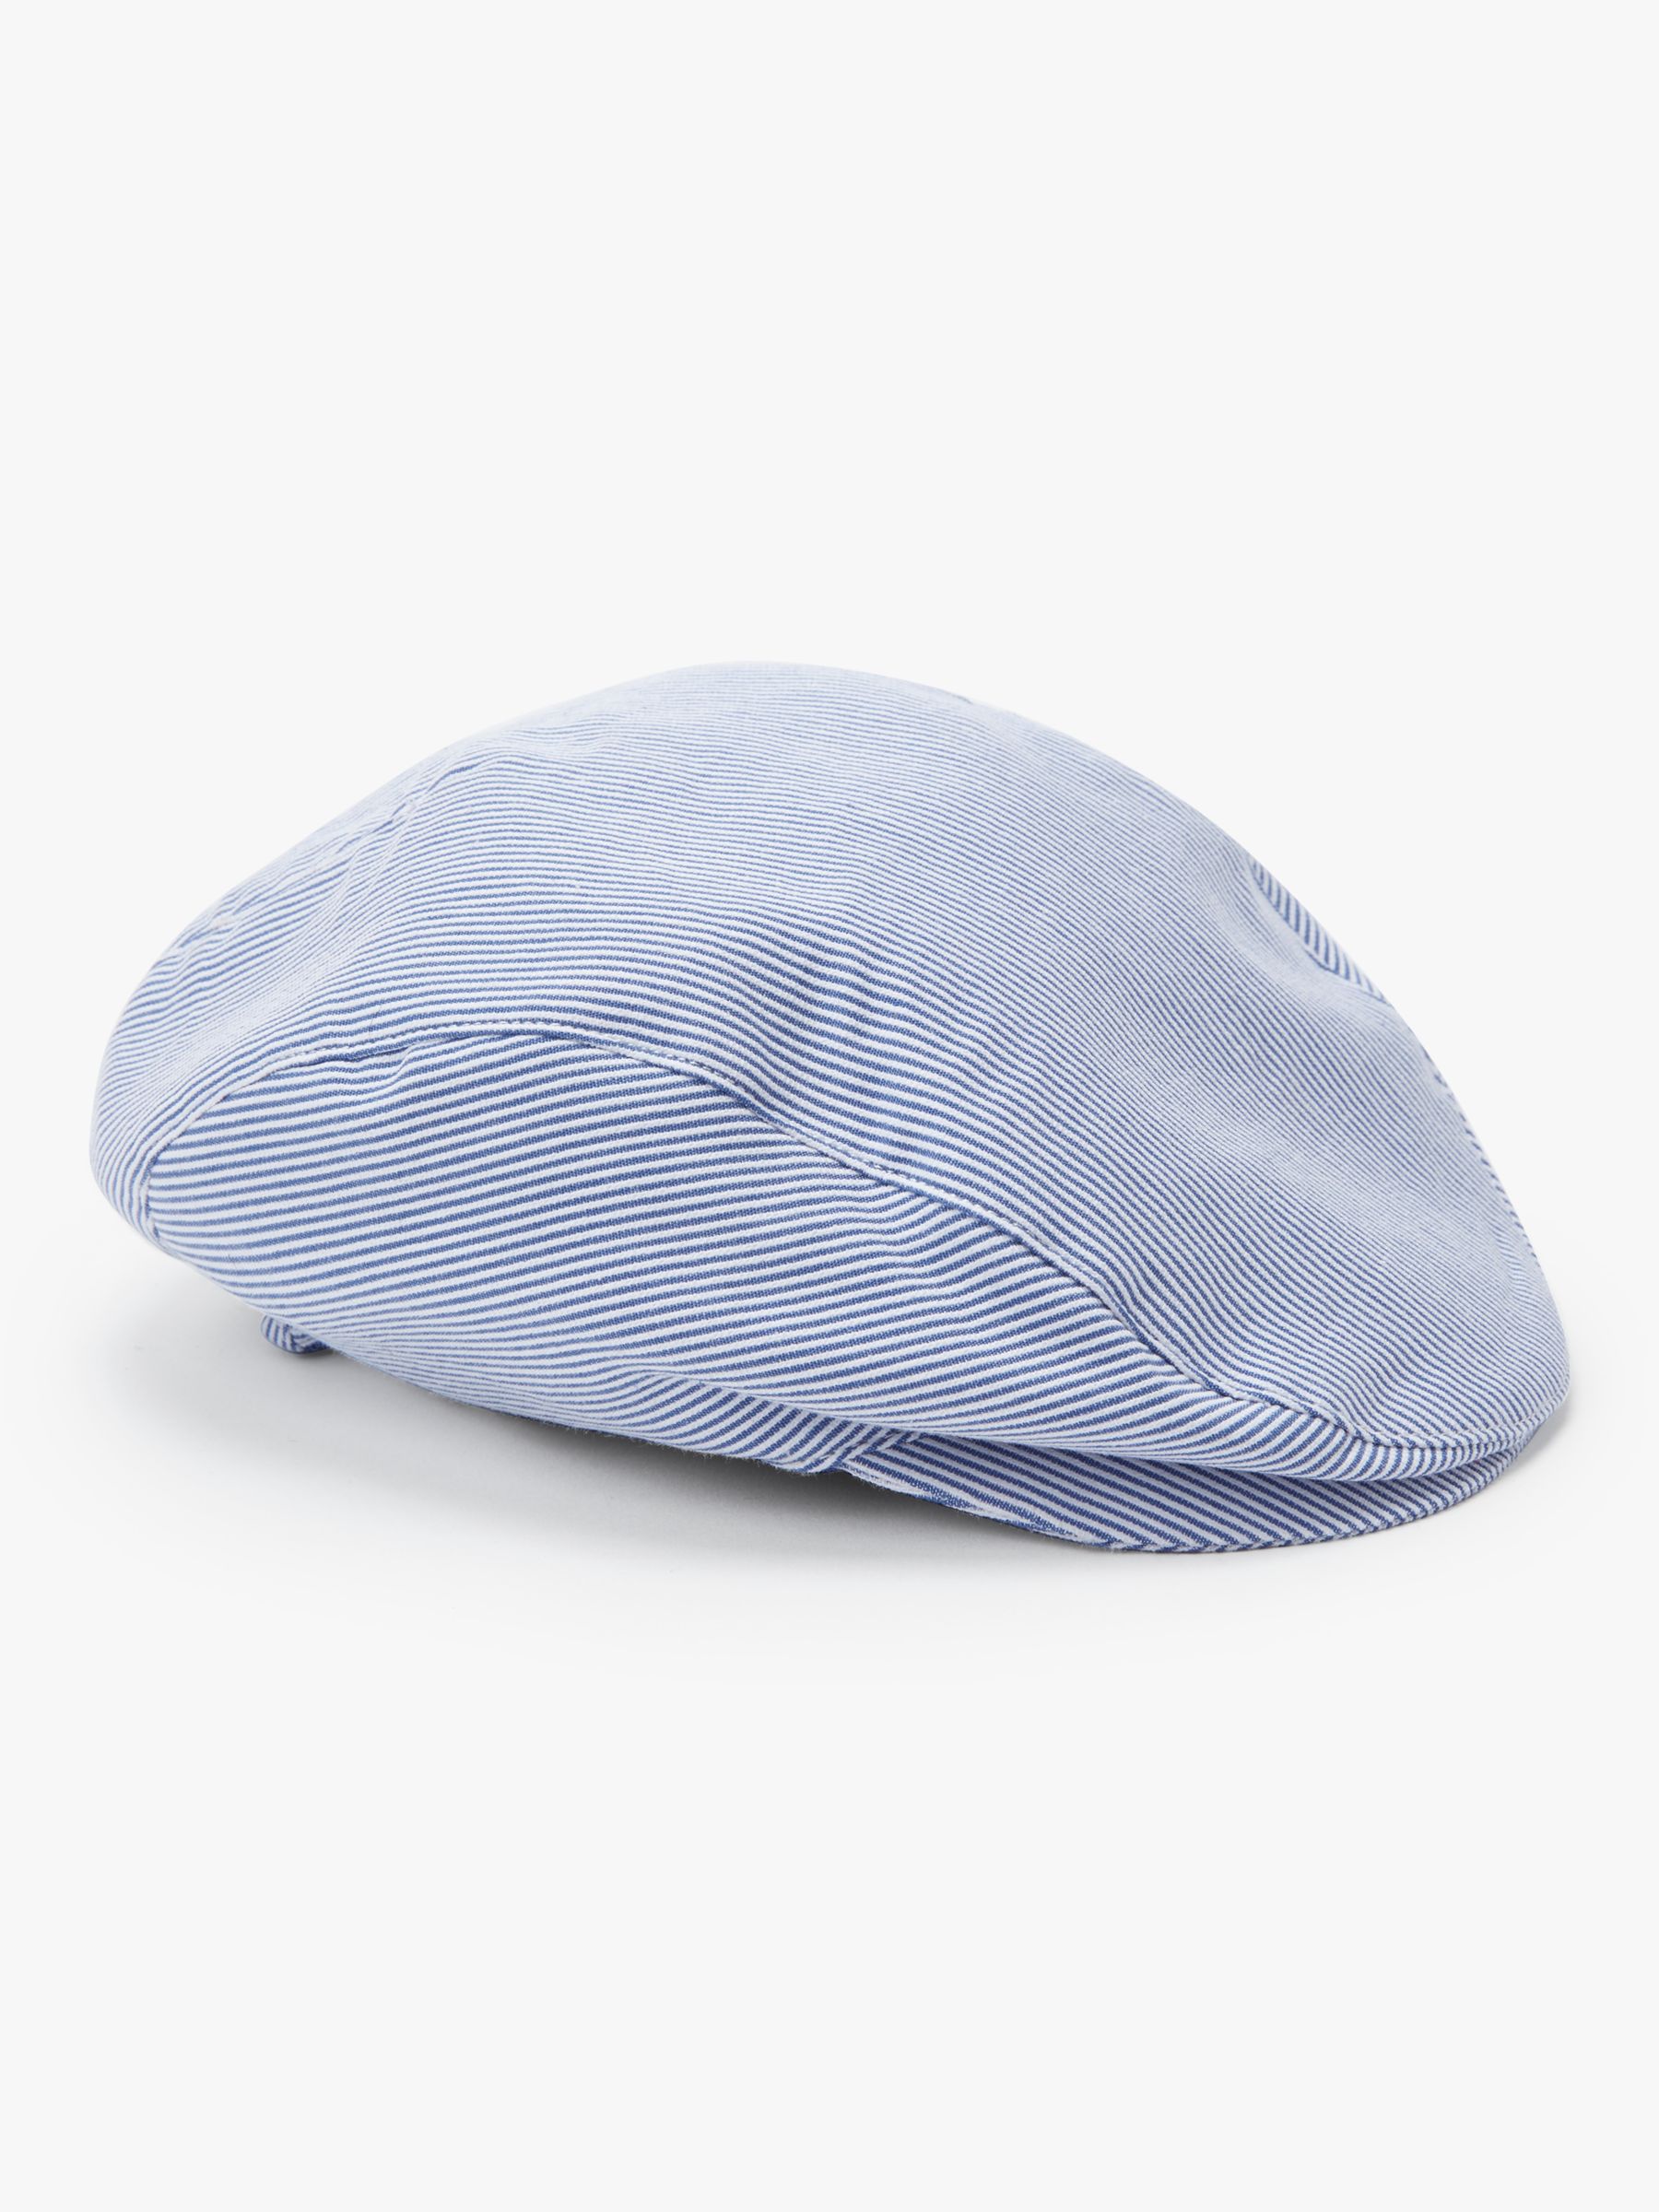 John Lewis & Partners Baby Textured Stripe Flat Cap, Blue